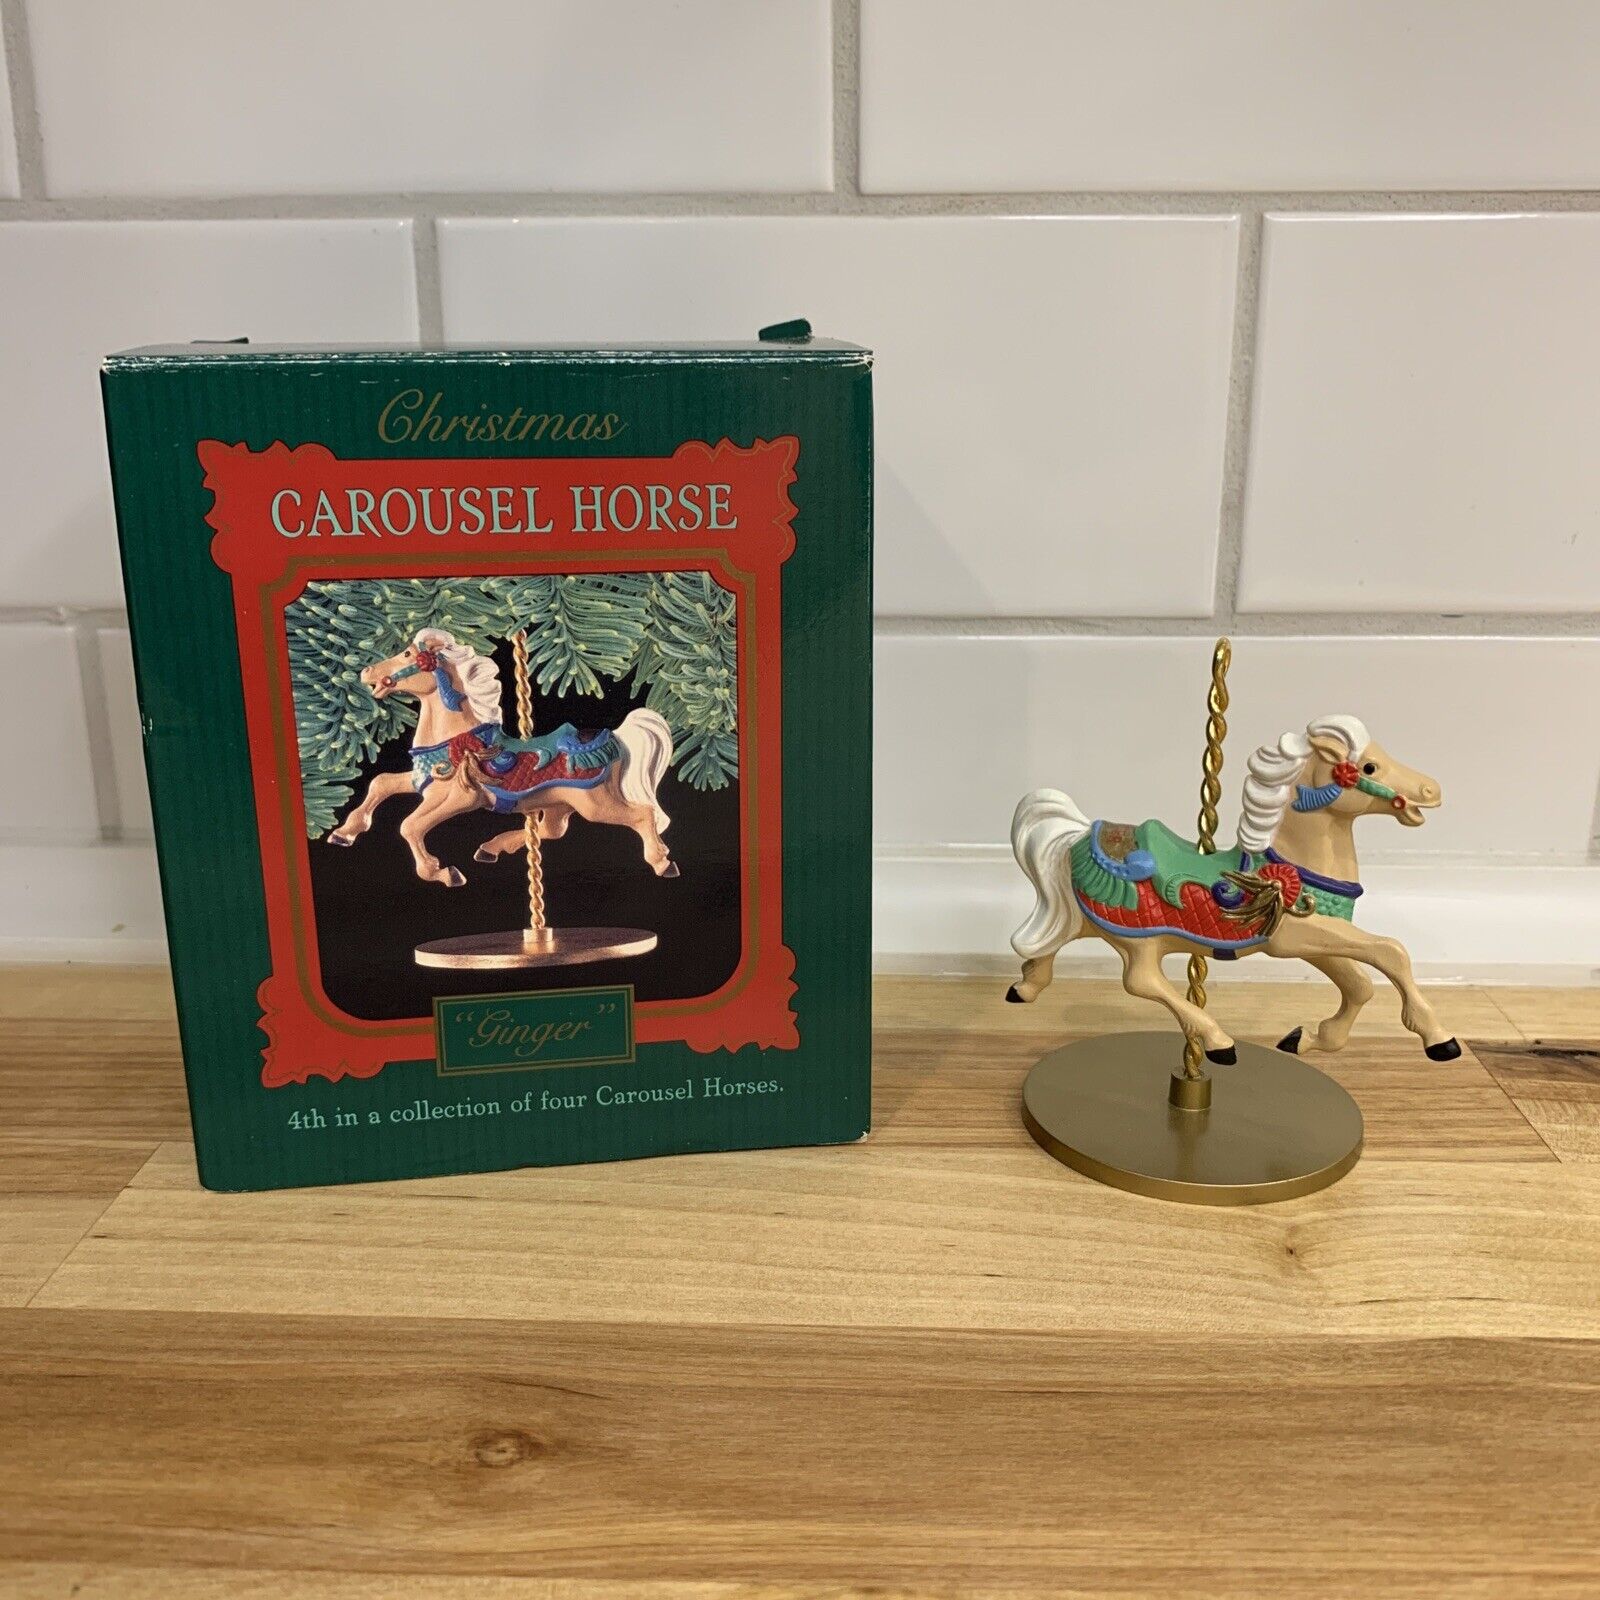 1989 Hallmark Christmas Carousel Horse GINGER Ornament 4 of 4 VTG Collectible